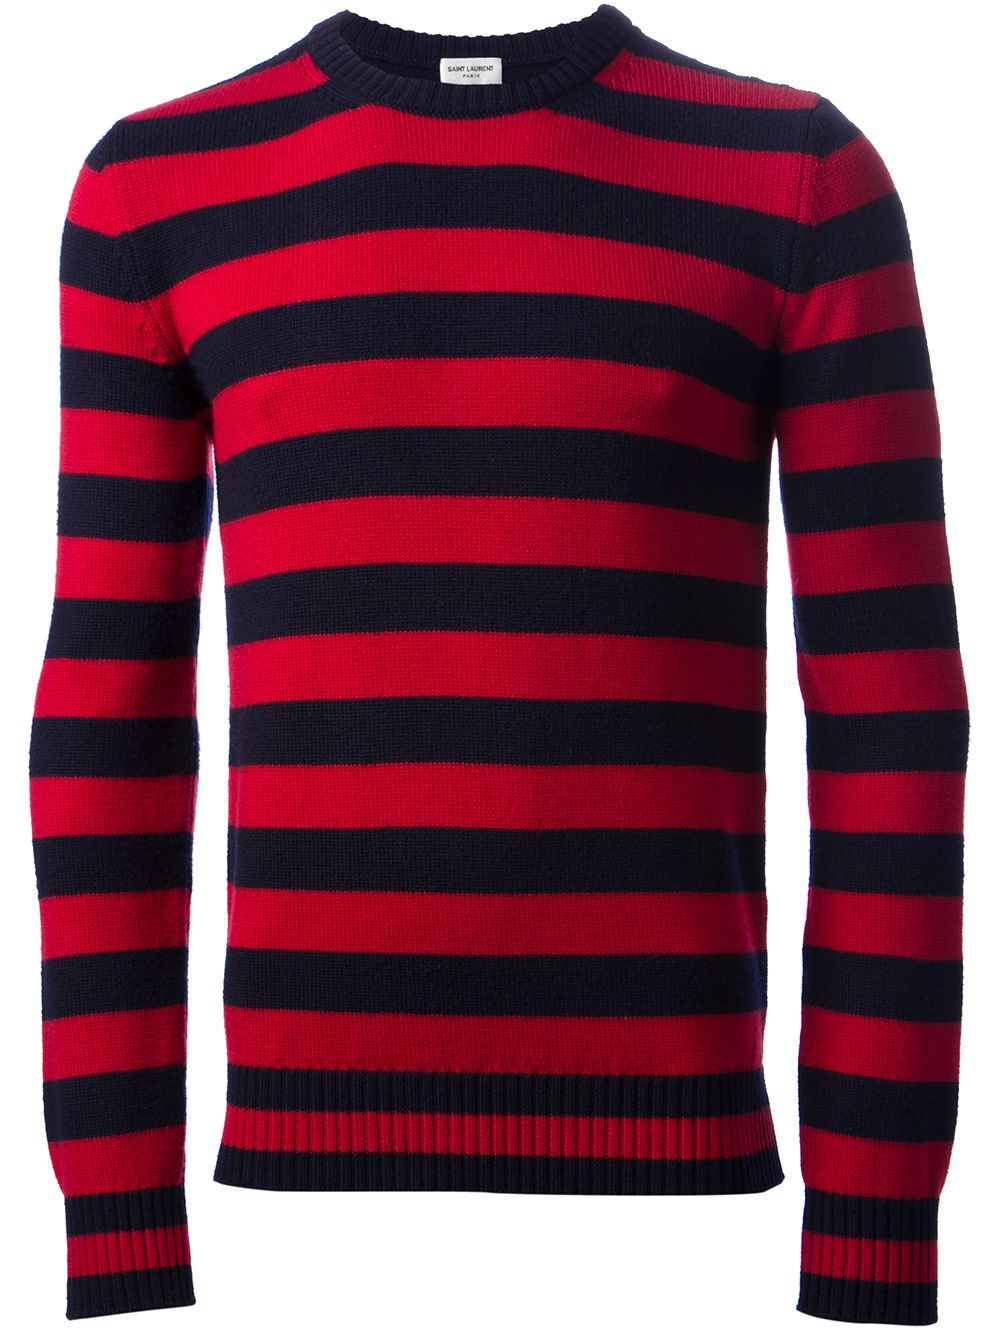 Saint Laurent Stripe Knit Sweater in Red (Blue) for Men - Lyst